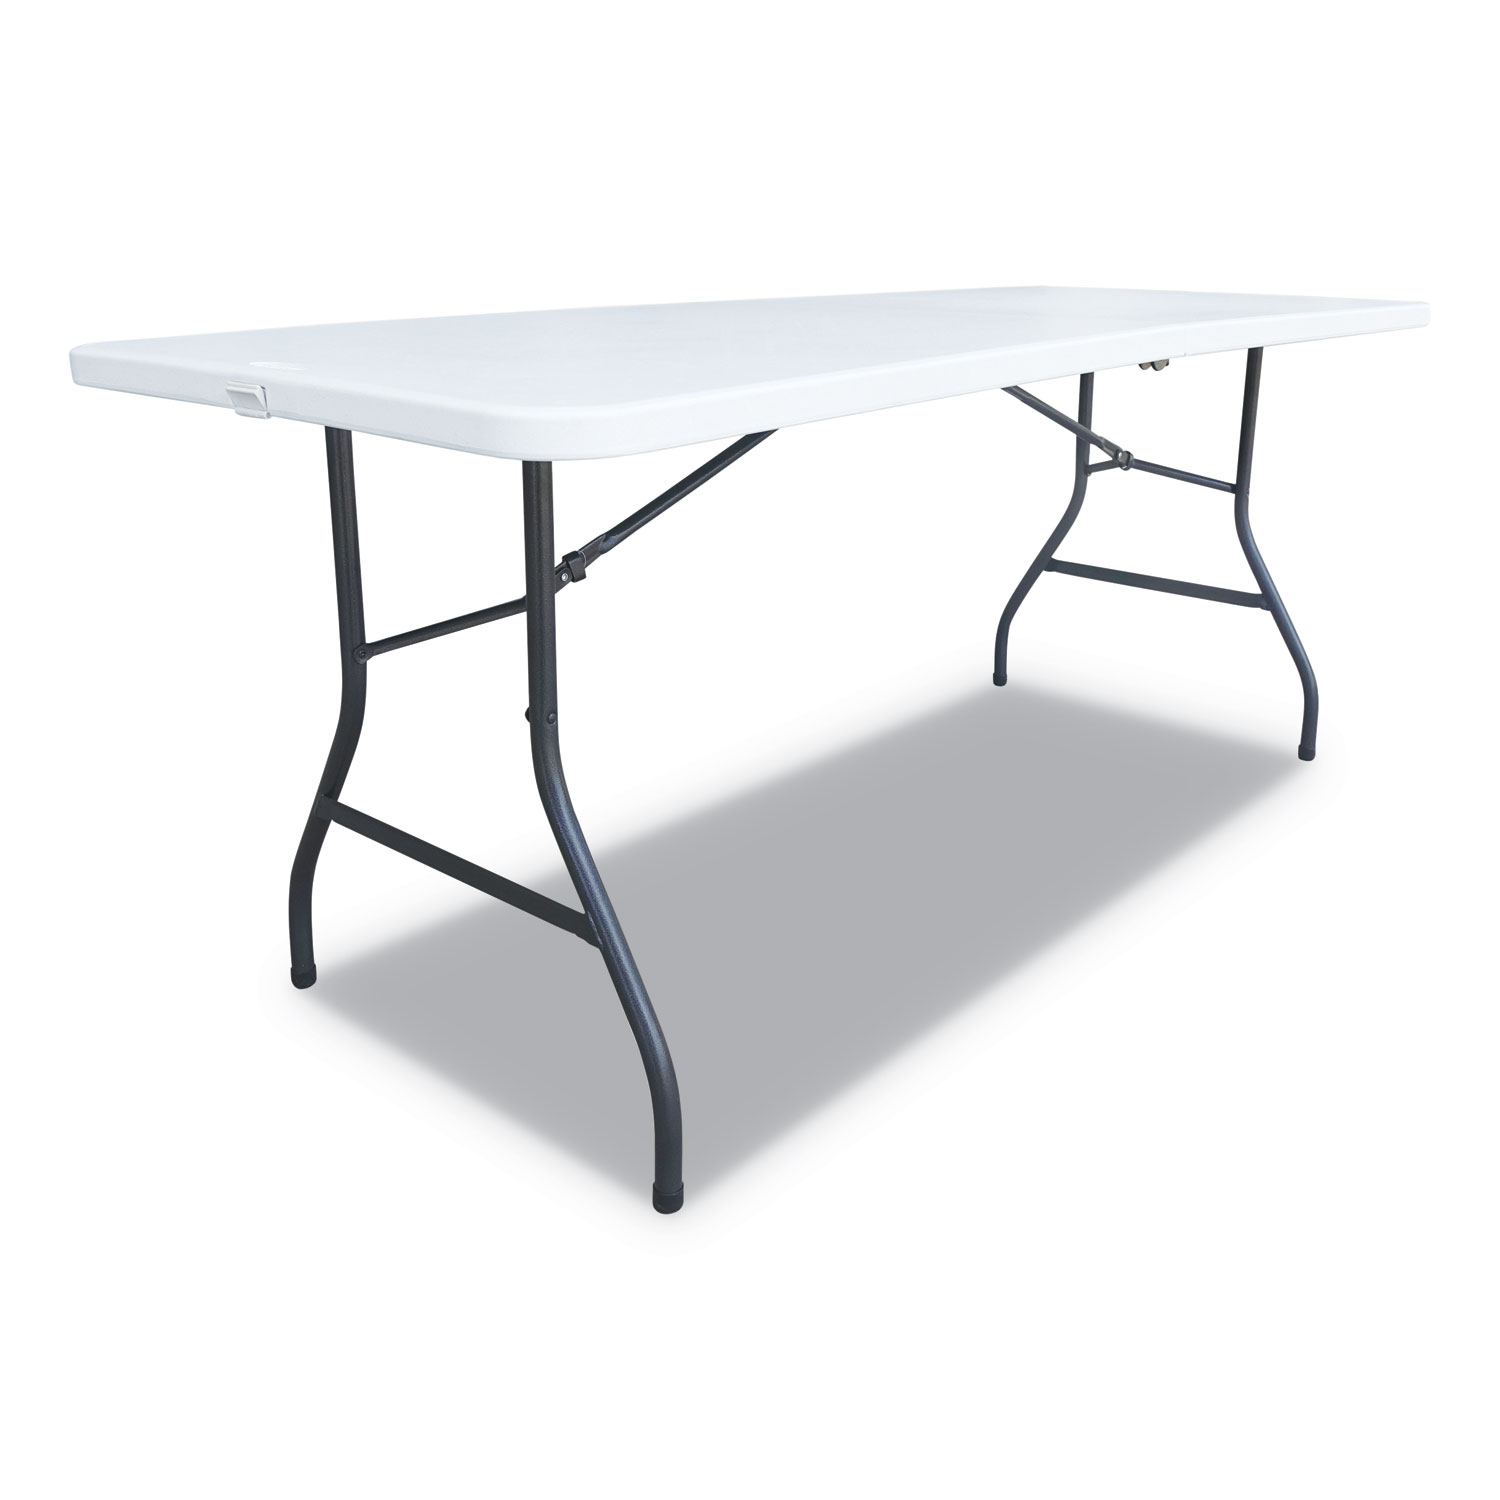  Alera ALEFR72H Fold-in-Half Resin Folding Table, 72w x 29 5/8d x 29 1/4h, White (ALEFR72H) 